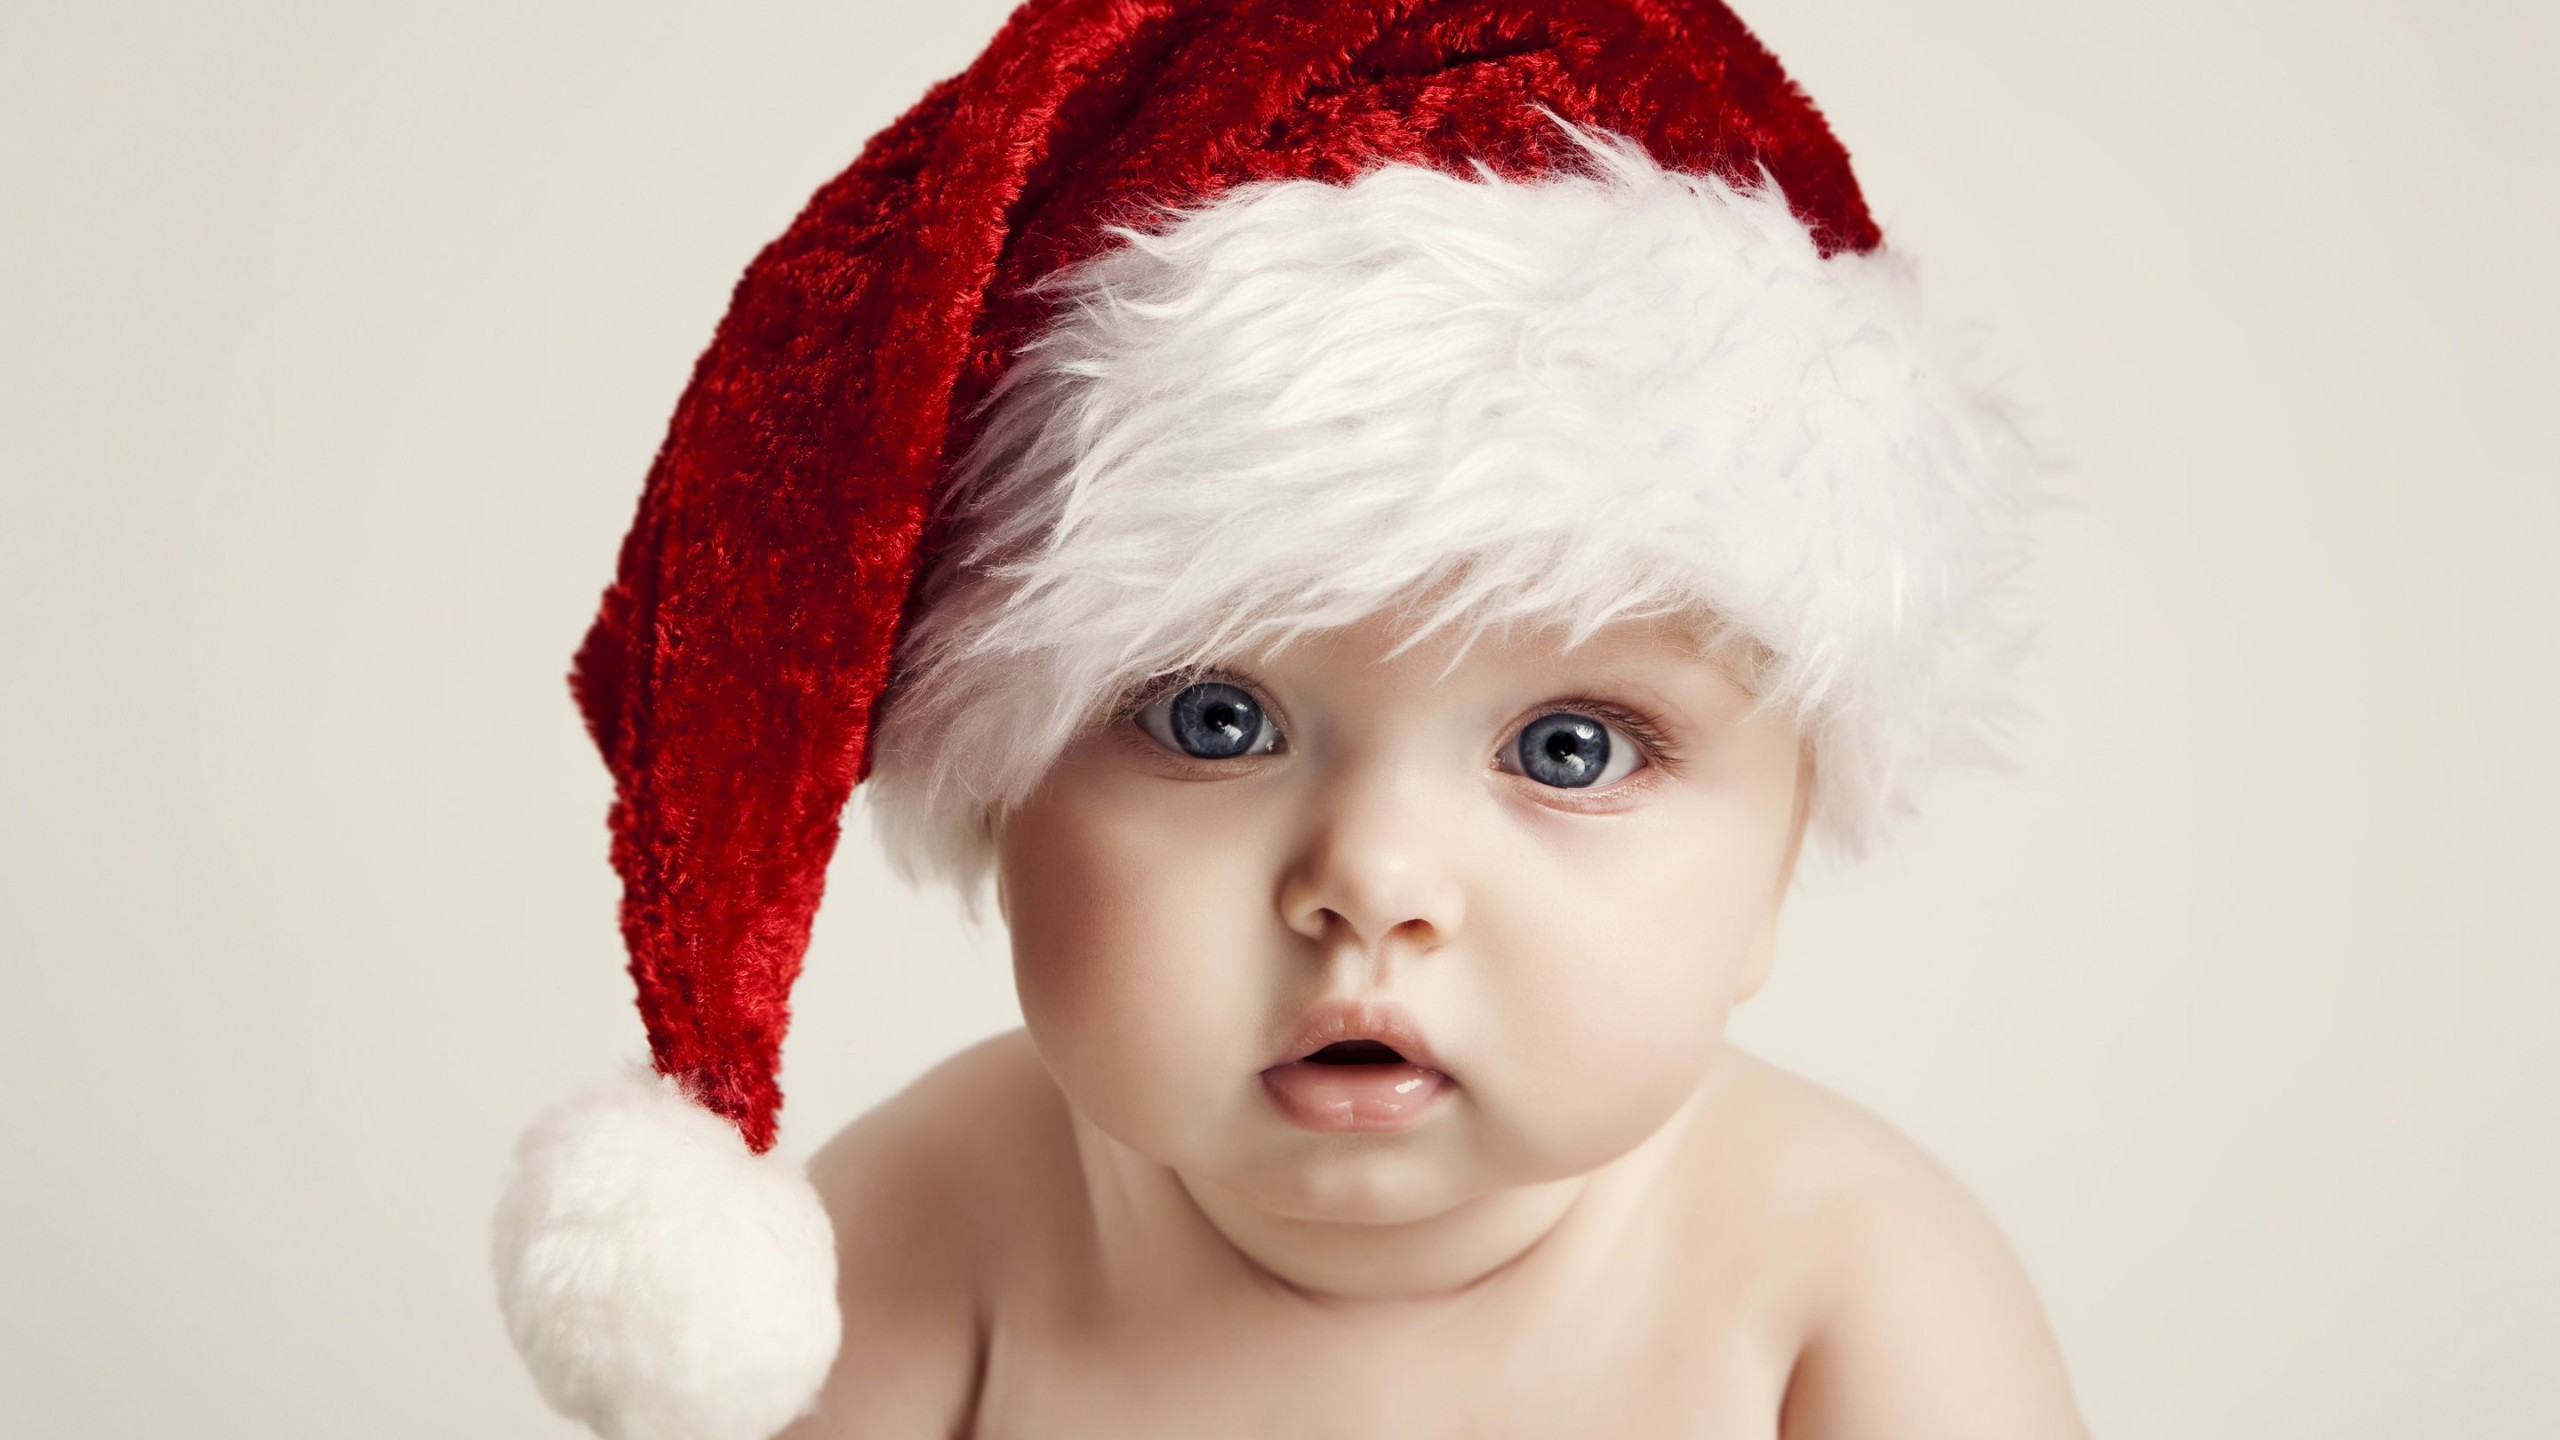 Santa Claus Baby Boy Wallpaper for Desktop 2560x1440